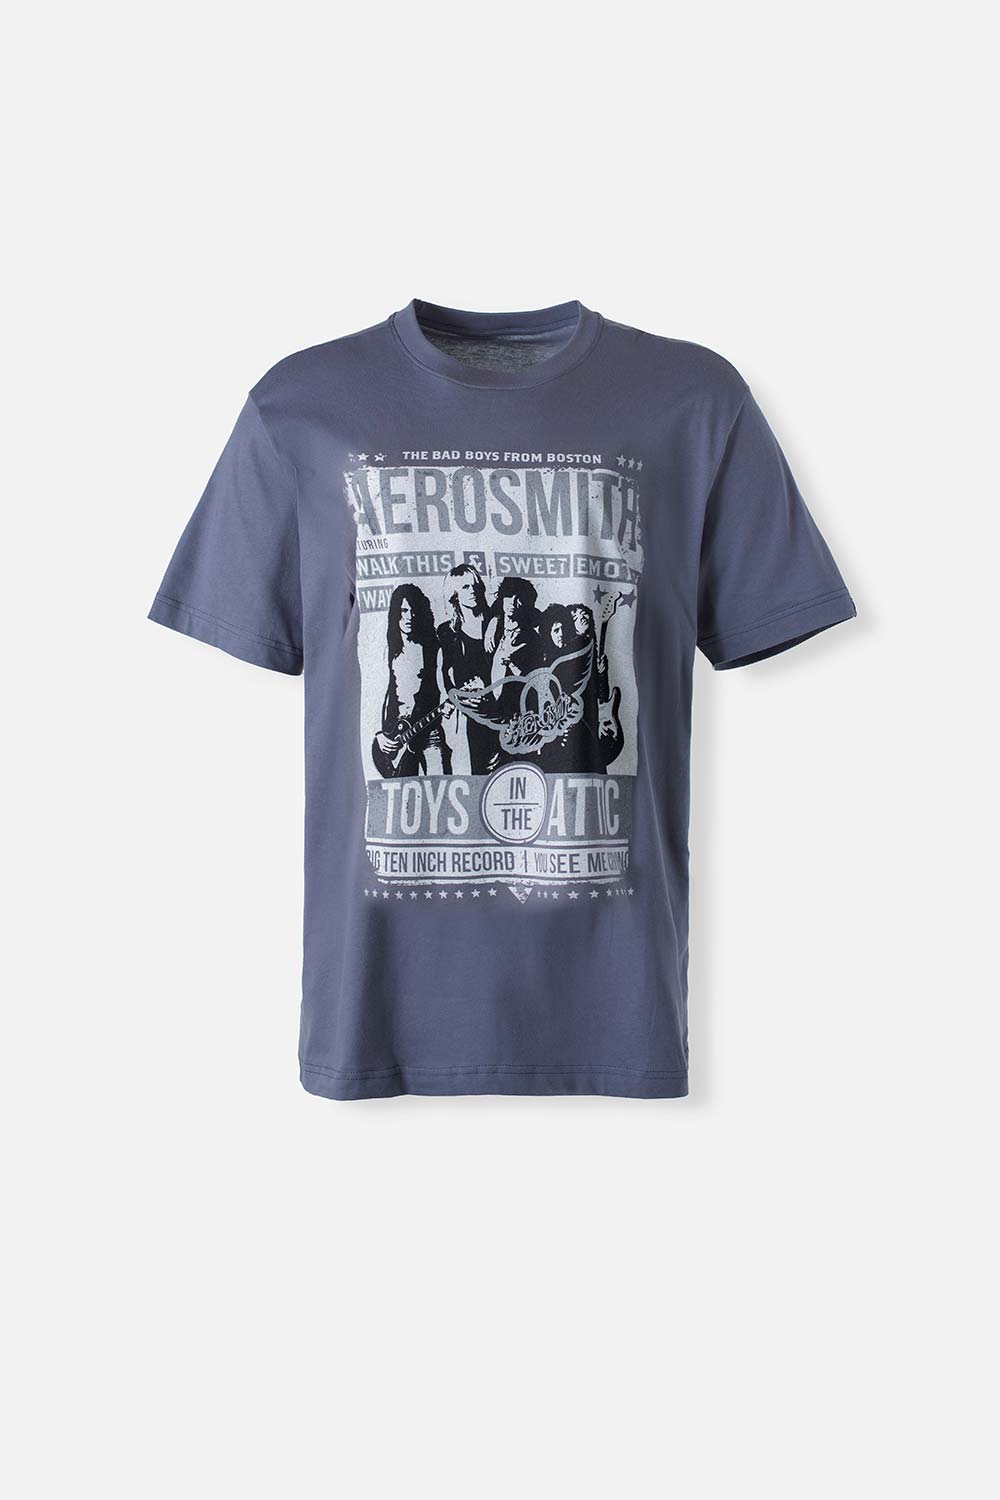 Camiseta de Aerosmith gris cuello redondo unisex XS-0